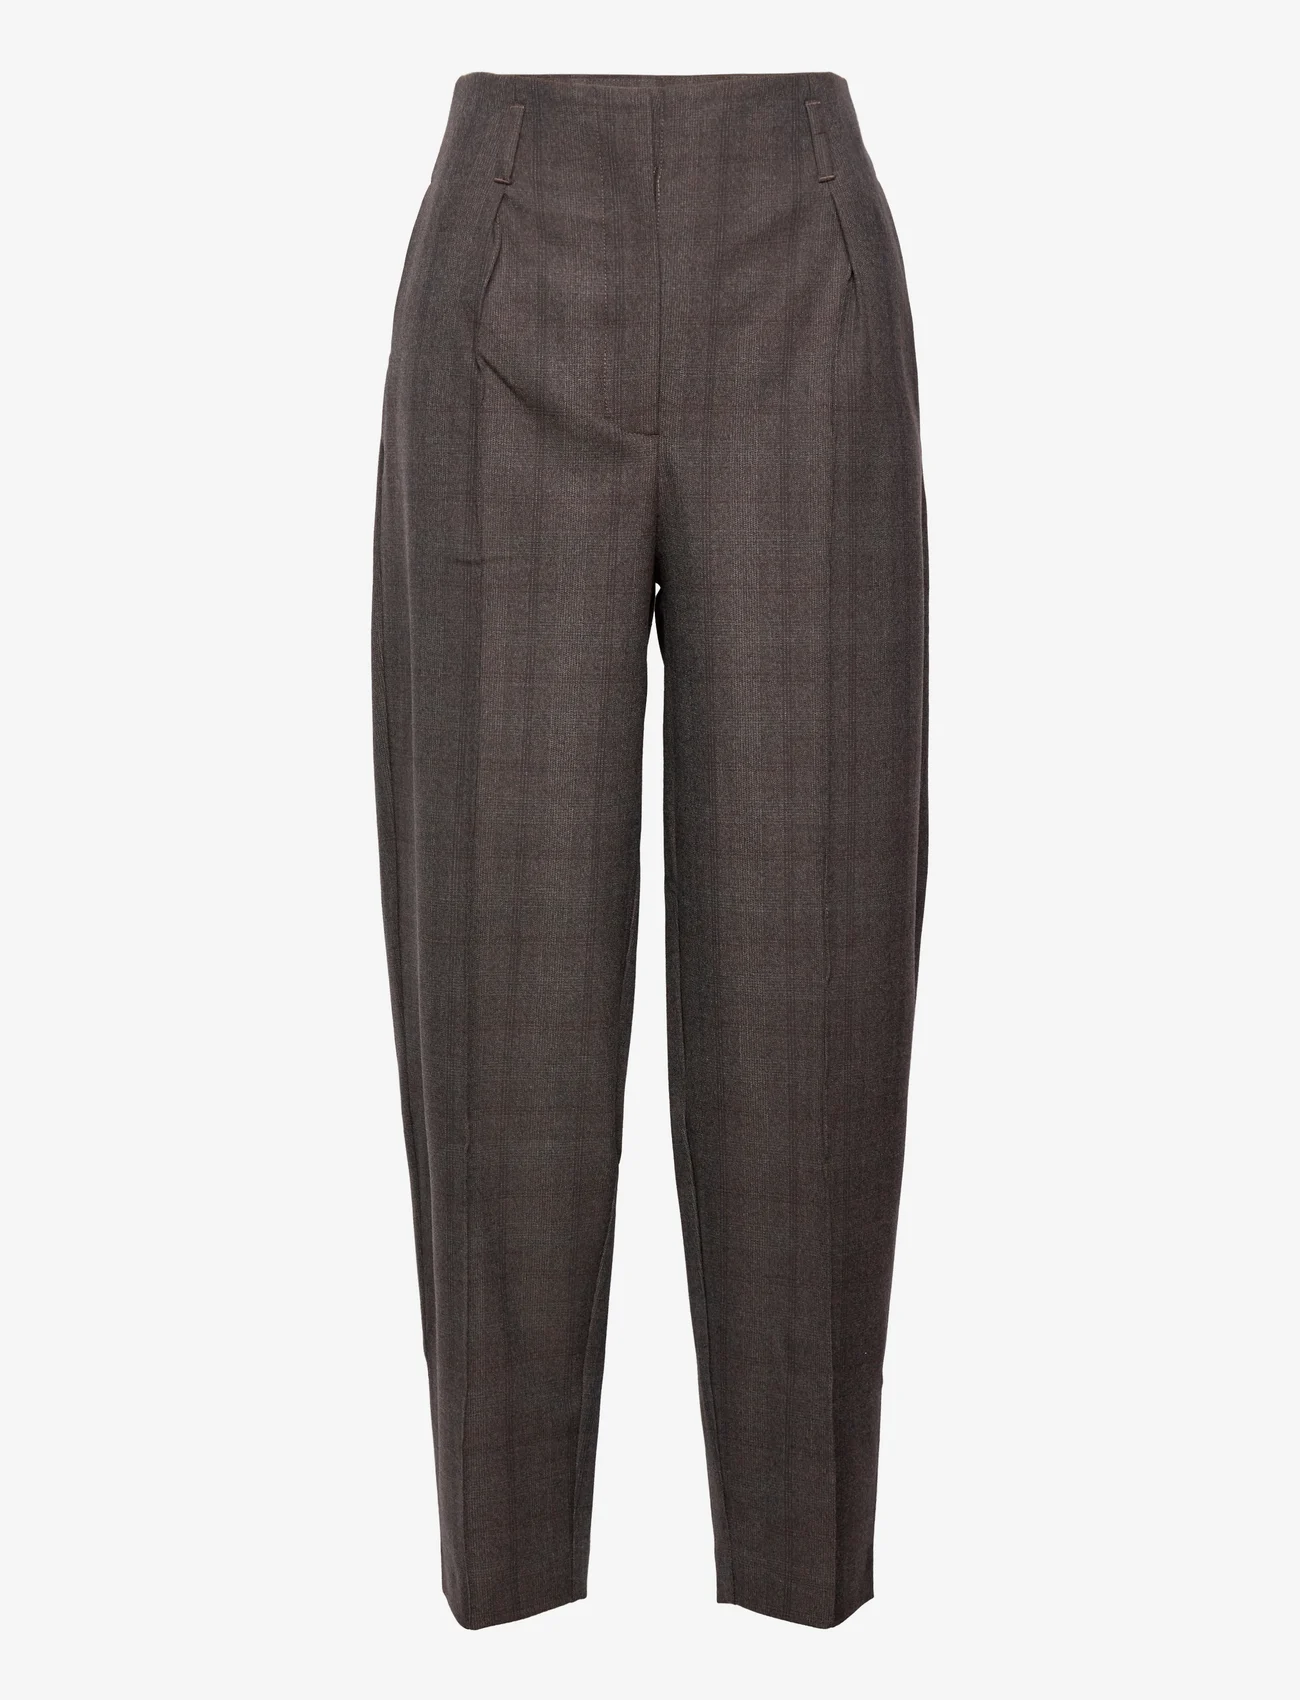 FIVEUNITS - Hailey - pantalons habillés - brown check - 1